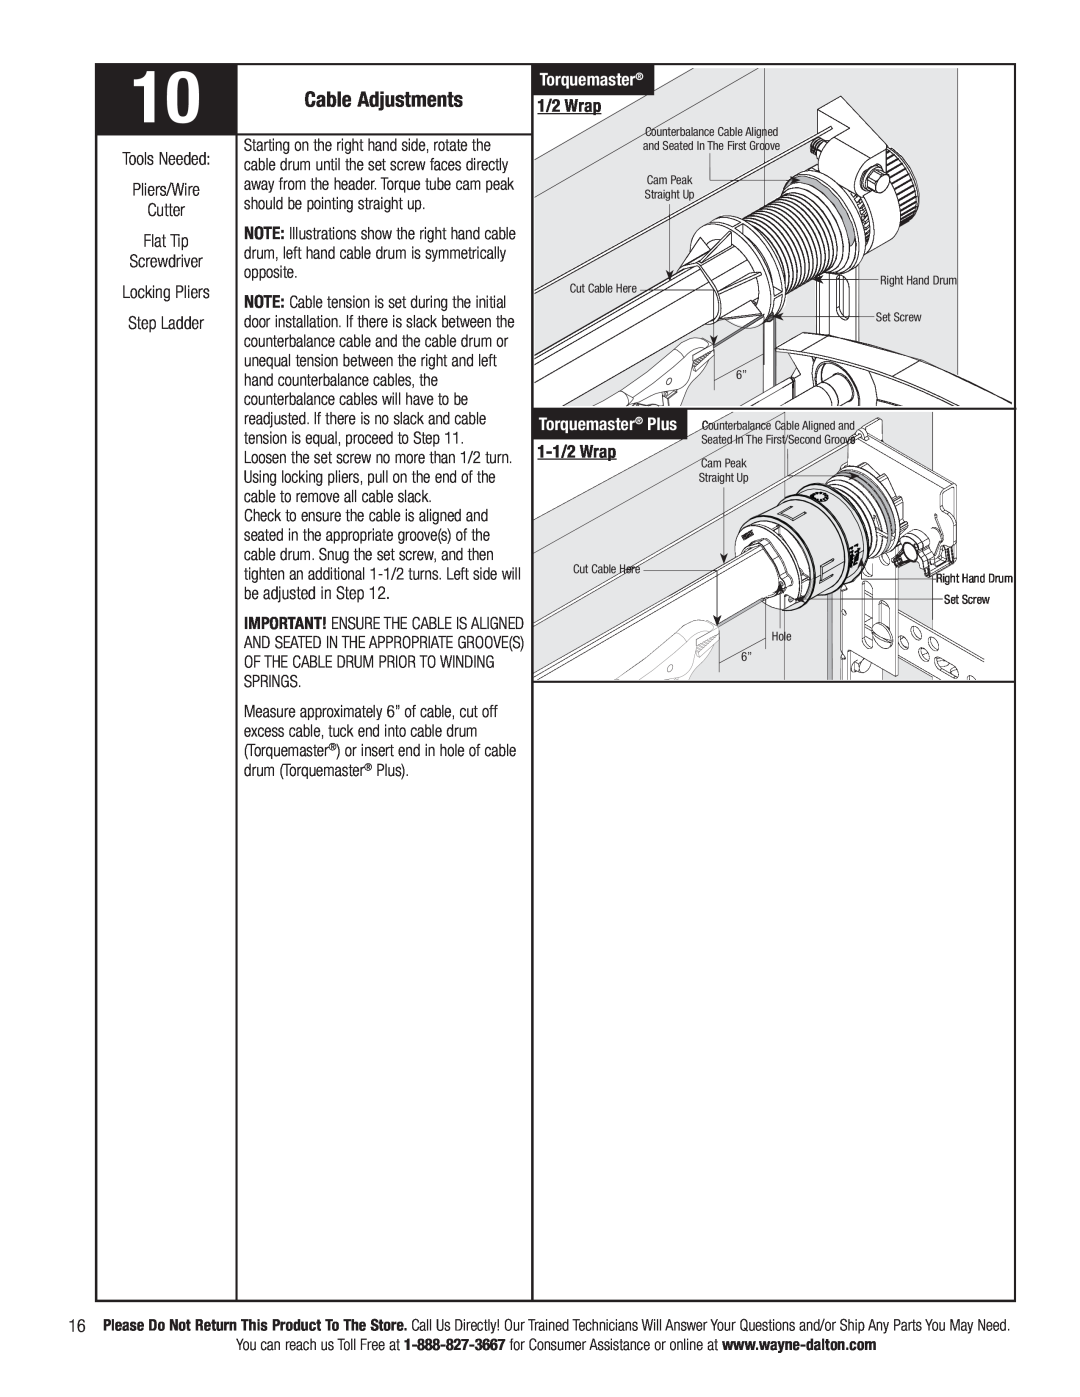 Wayne-Dalton 3790-Z installation instructions Cable Adjustments, Torquemaster 